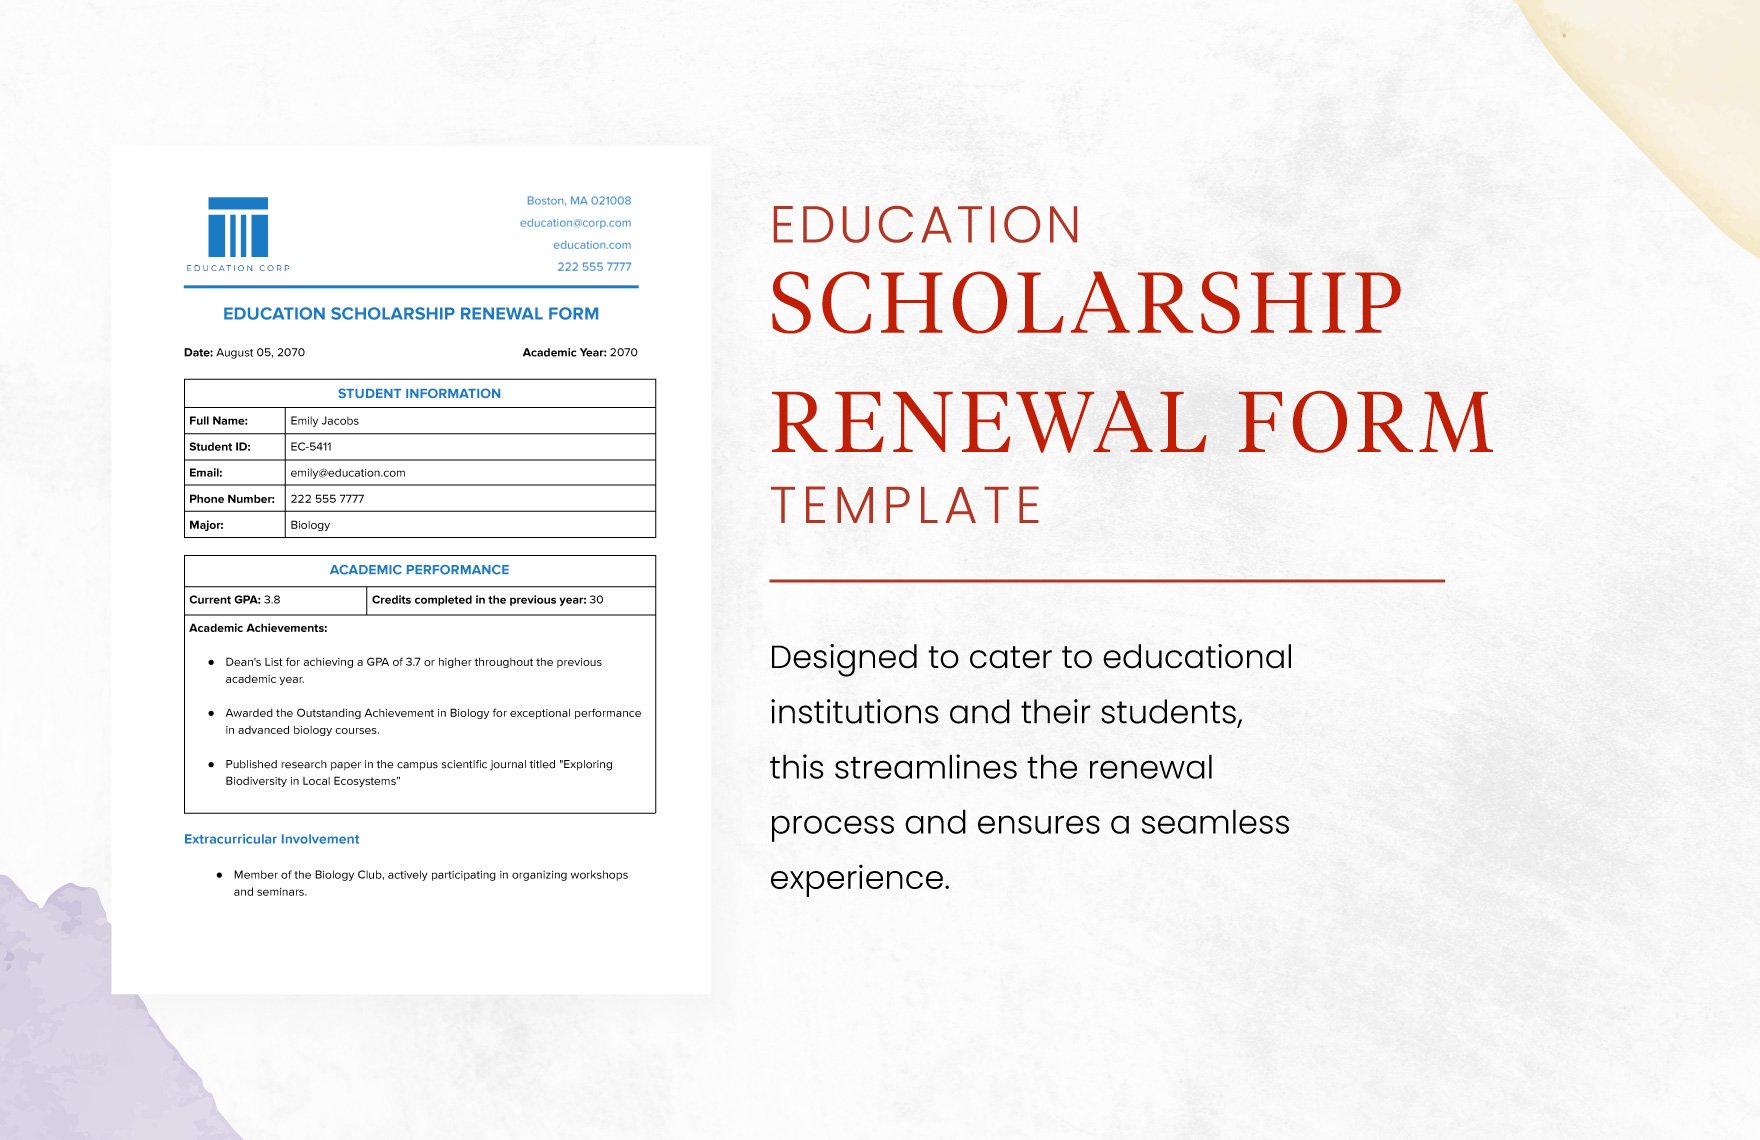 Education Scholarship Renewal Form Template in Word, Google Docs, PDF